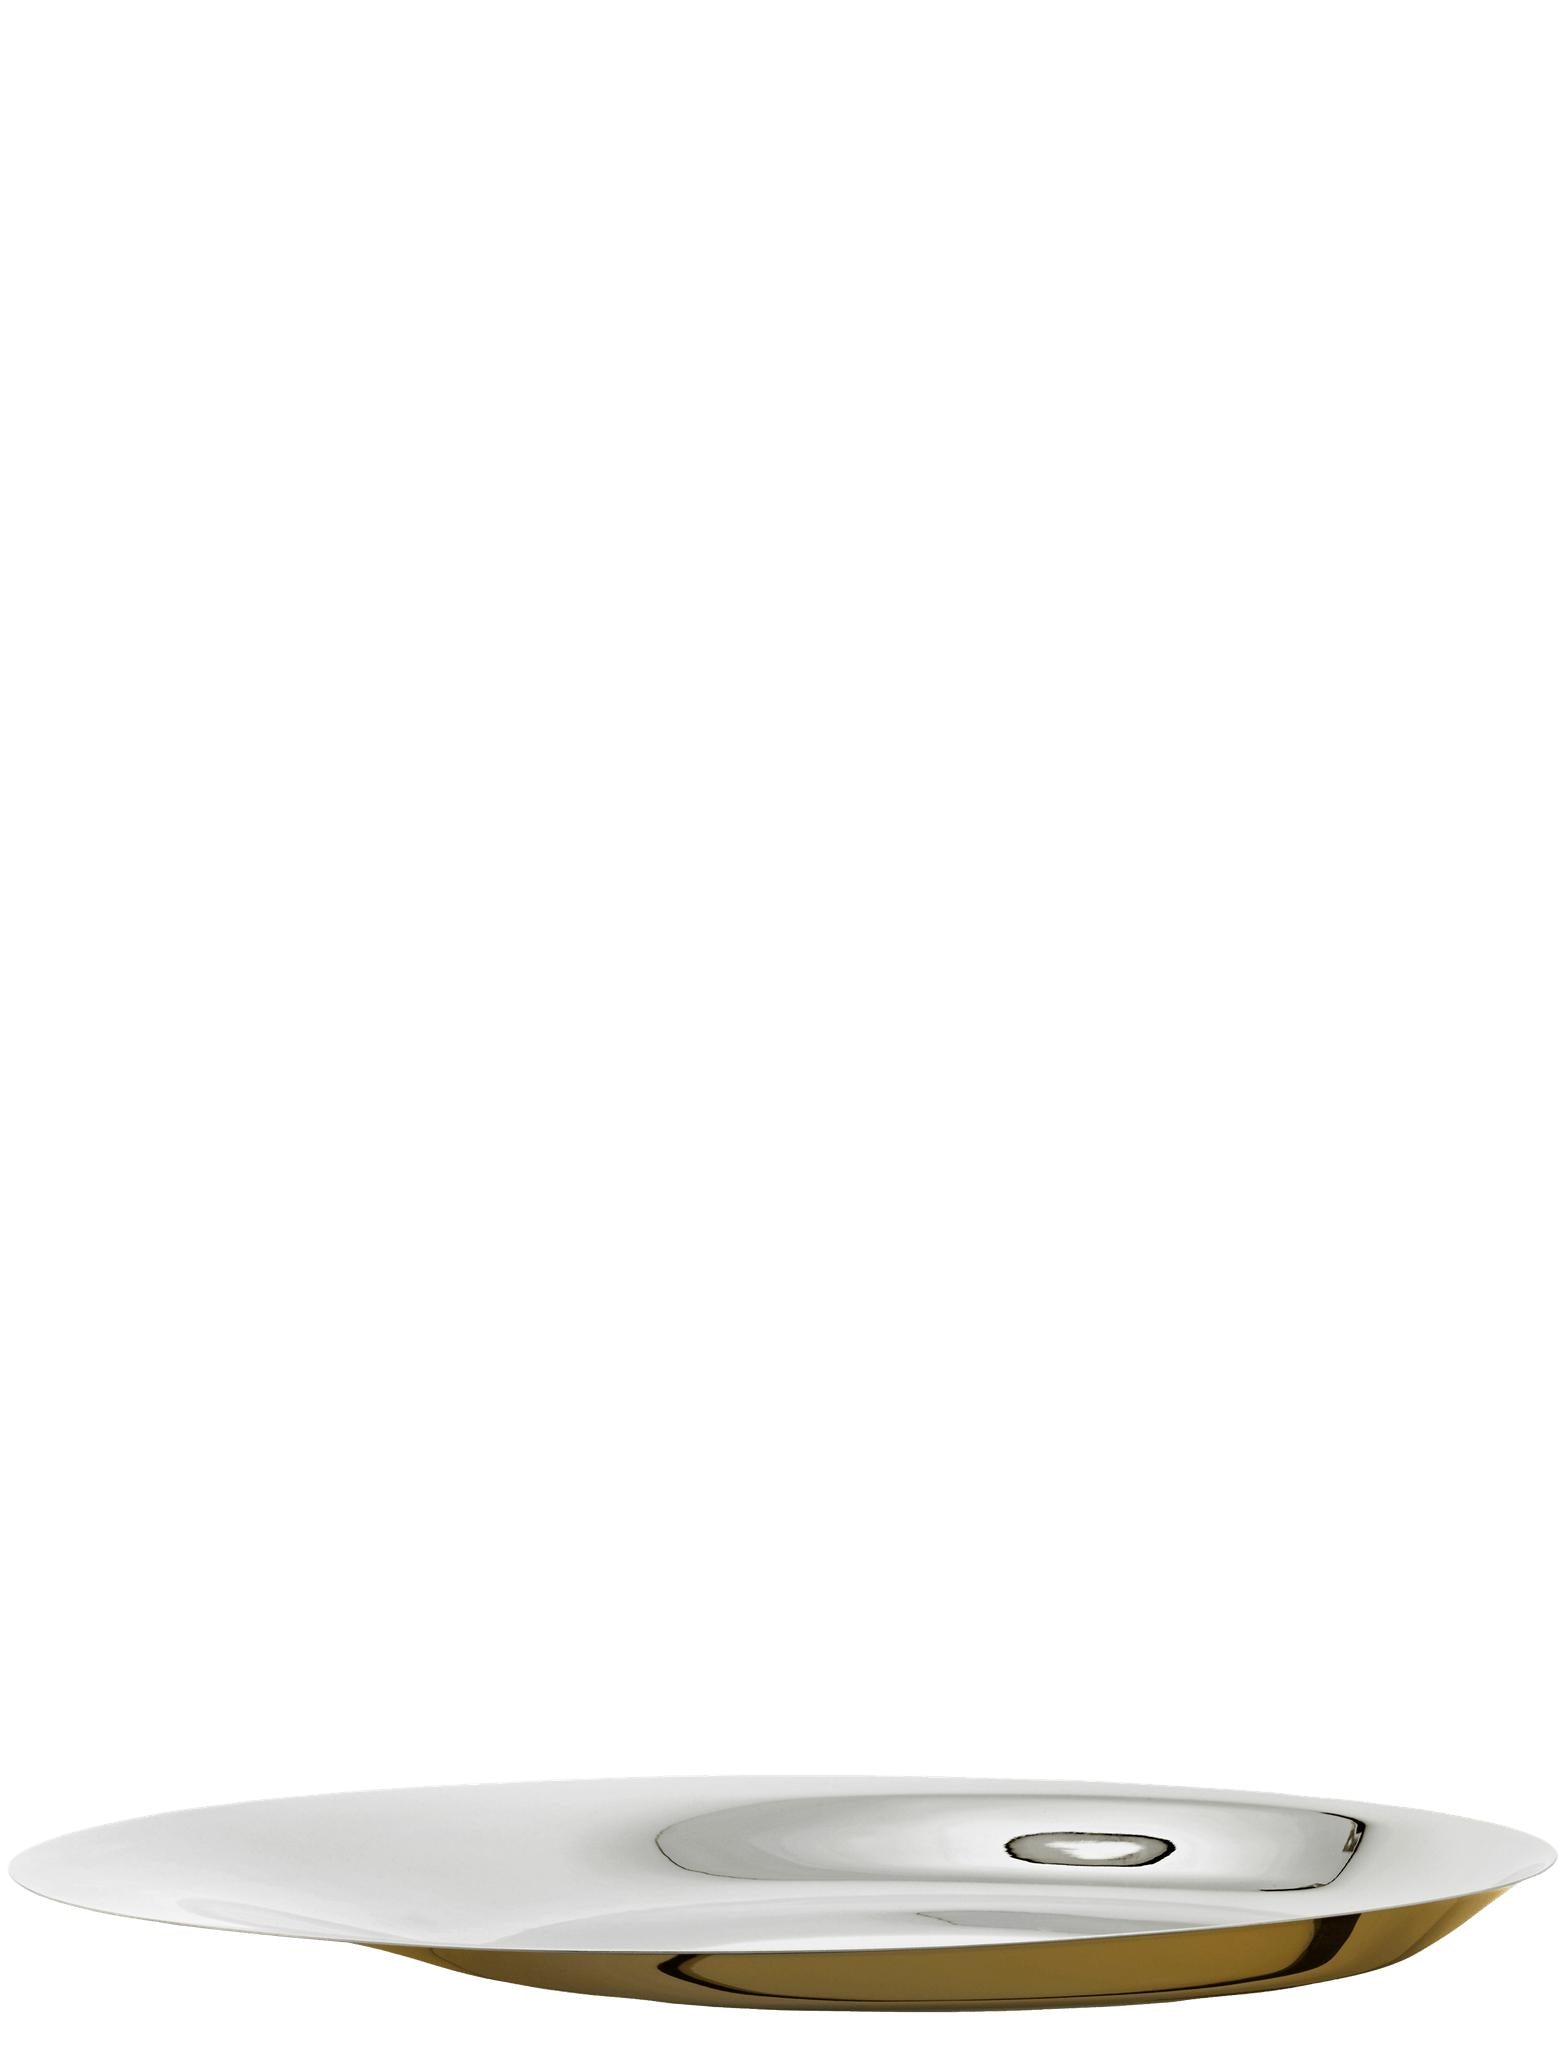 Stelton Norman Foster Bowl Ø 46 cm, kultainen